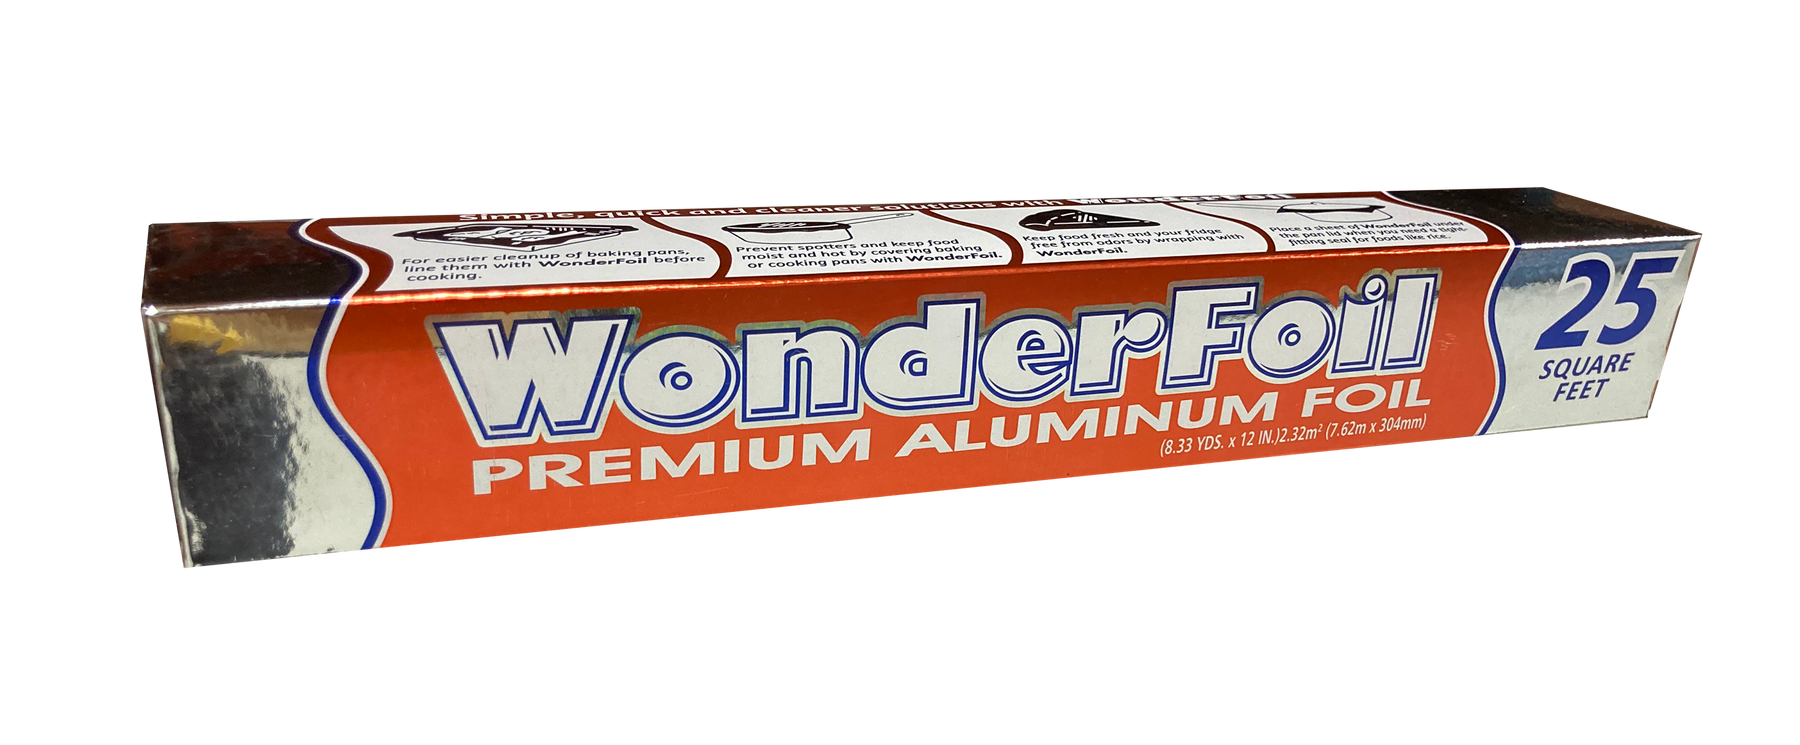 Wonderfoil Premium Aluminum Foil, 25 sq ft